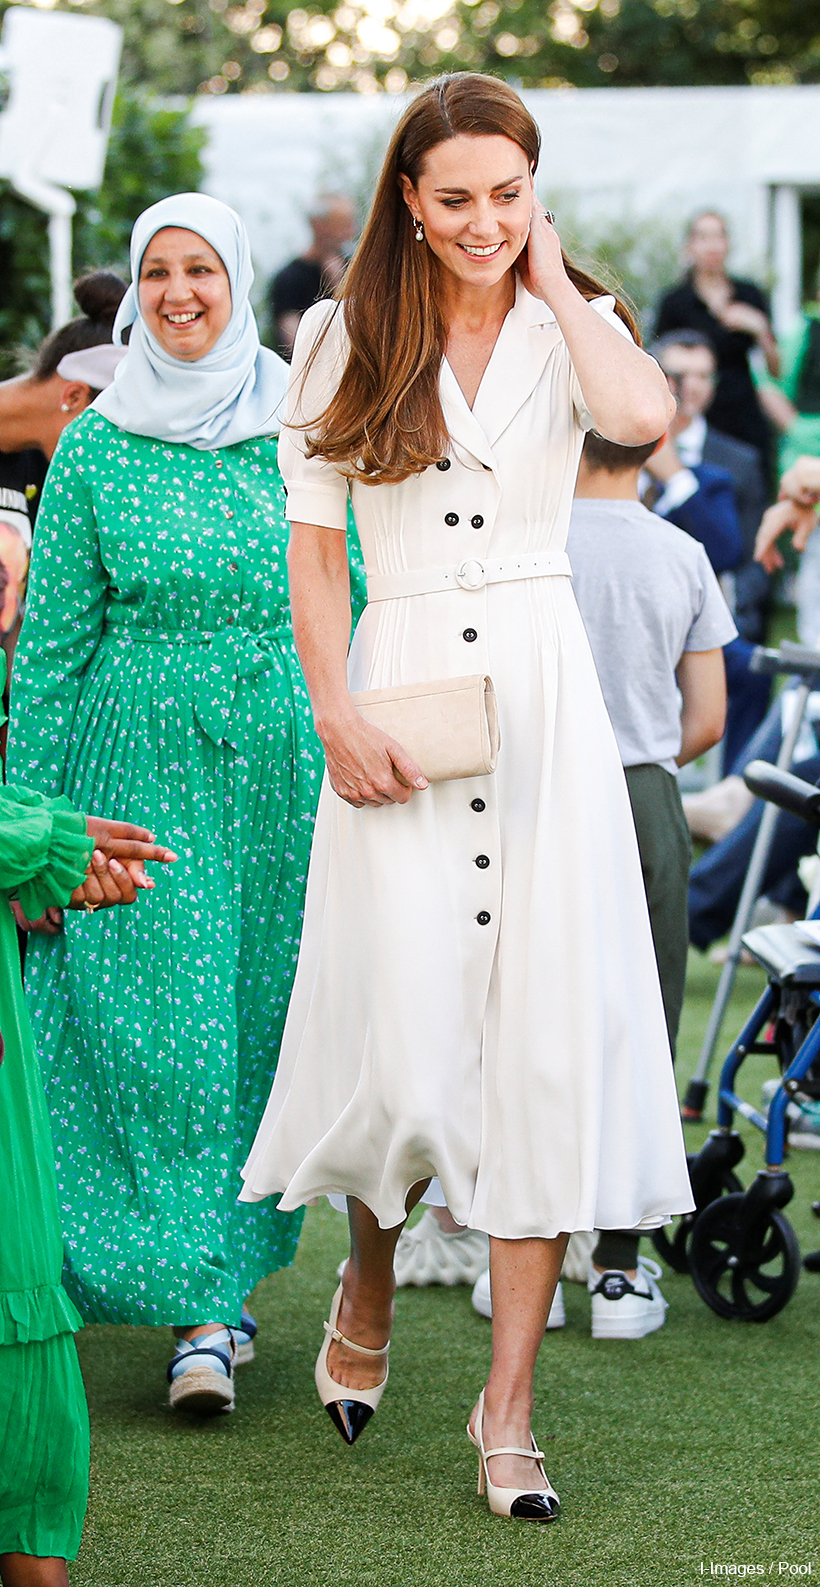 Kate Middleton wearing the Suzannah Dress